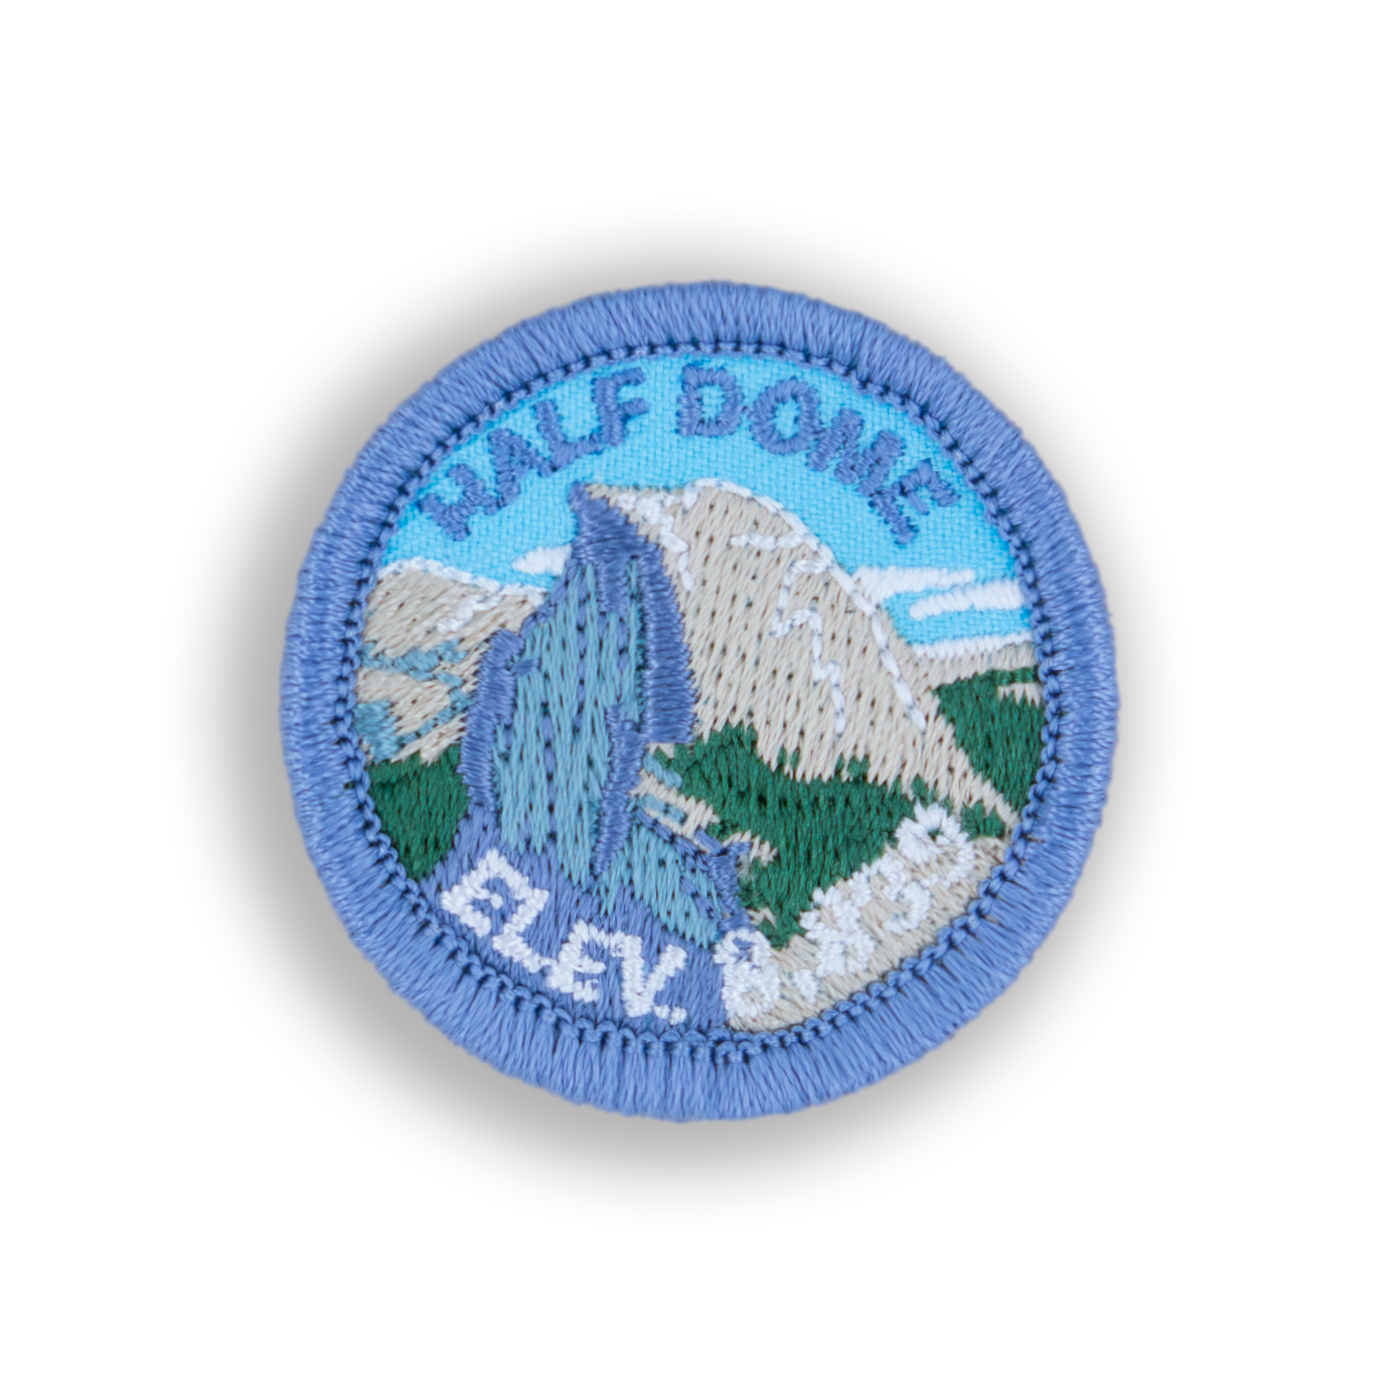 Half Dome Patch | Demerit Wear - Fake Merit Badges